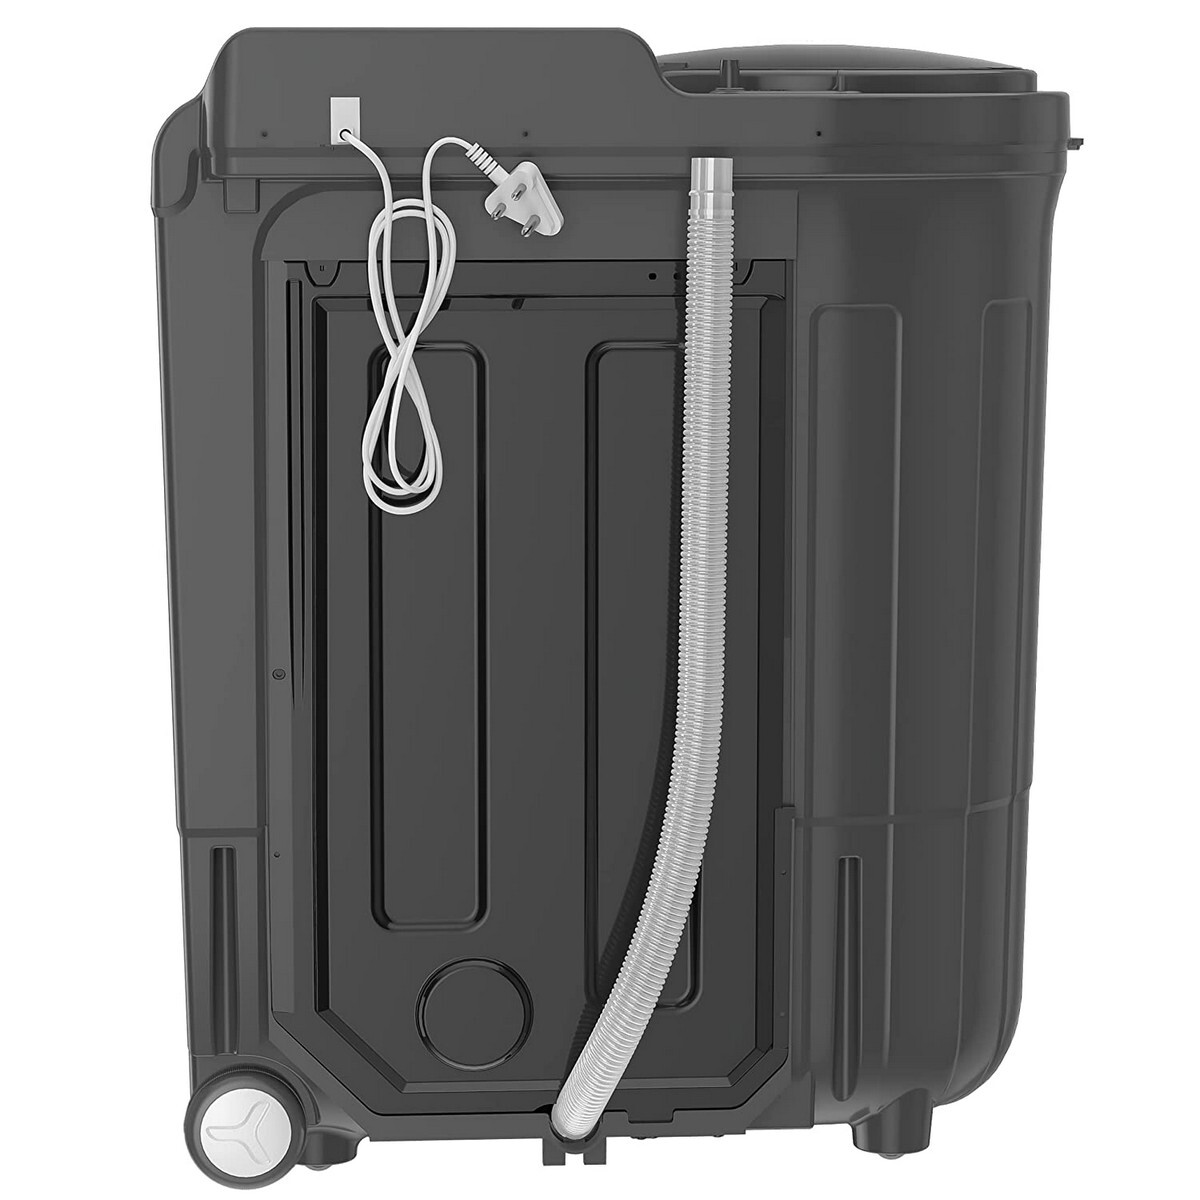 Whirlpool Semi Automatic Washing Machine Ace Drymax Grey 7.5Kg